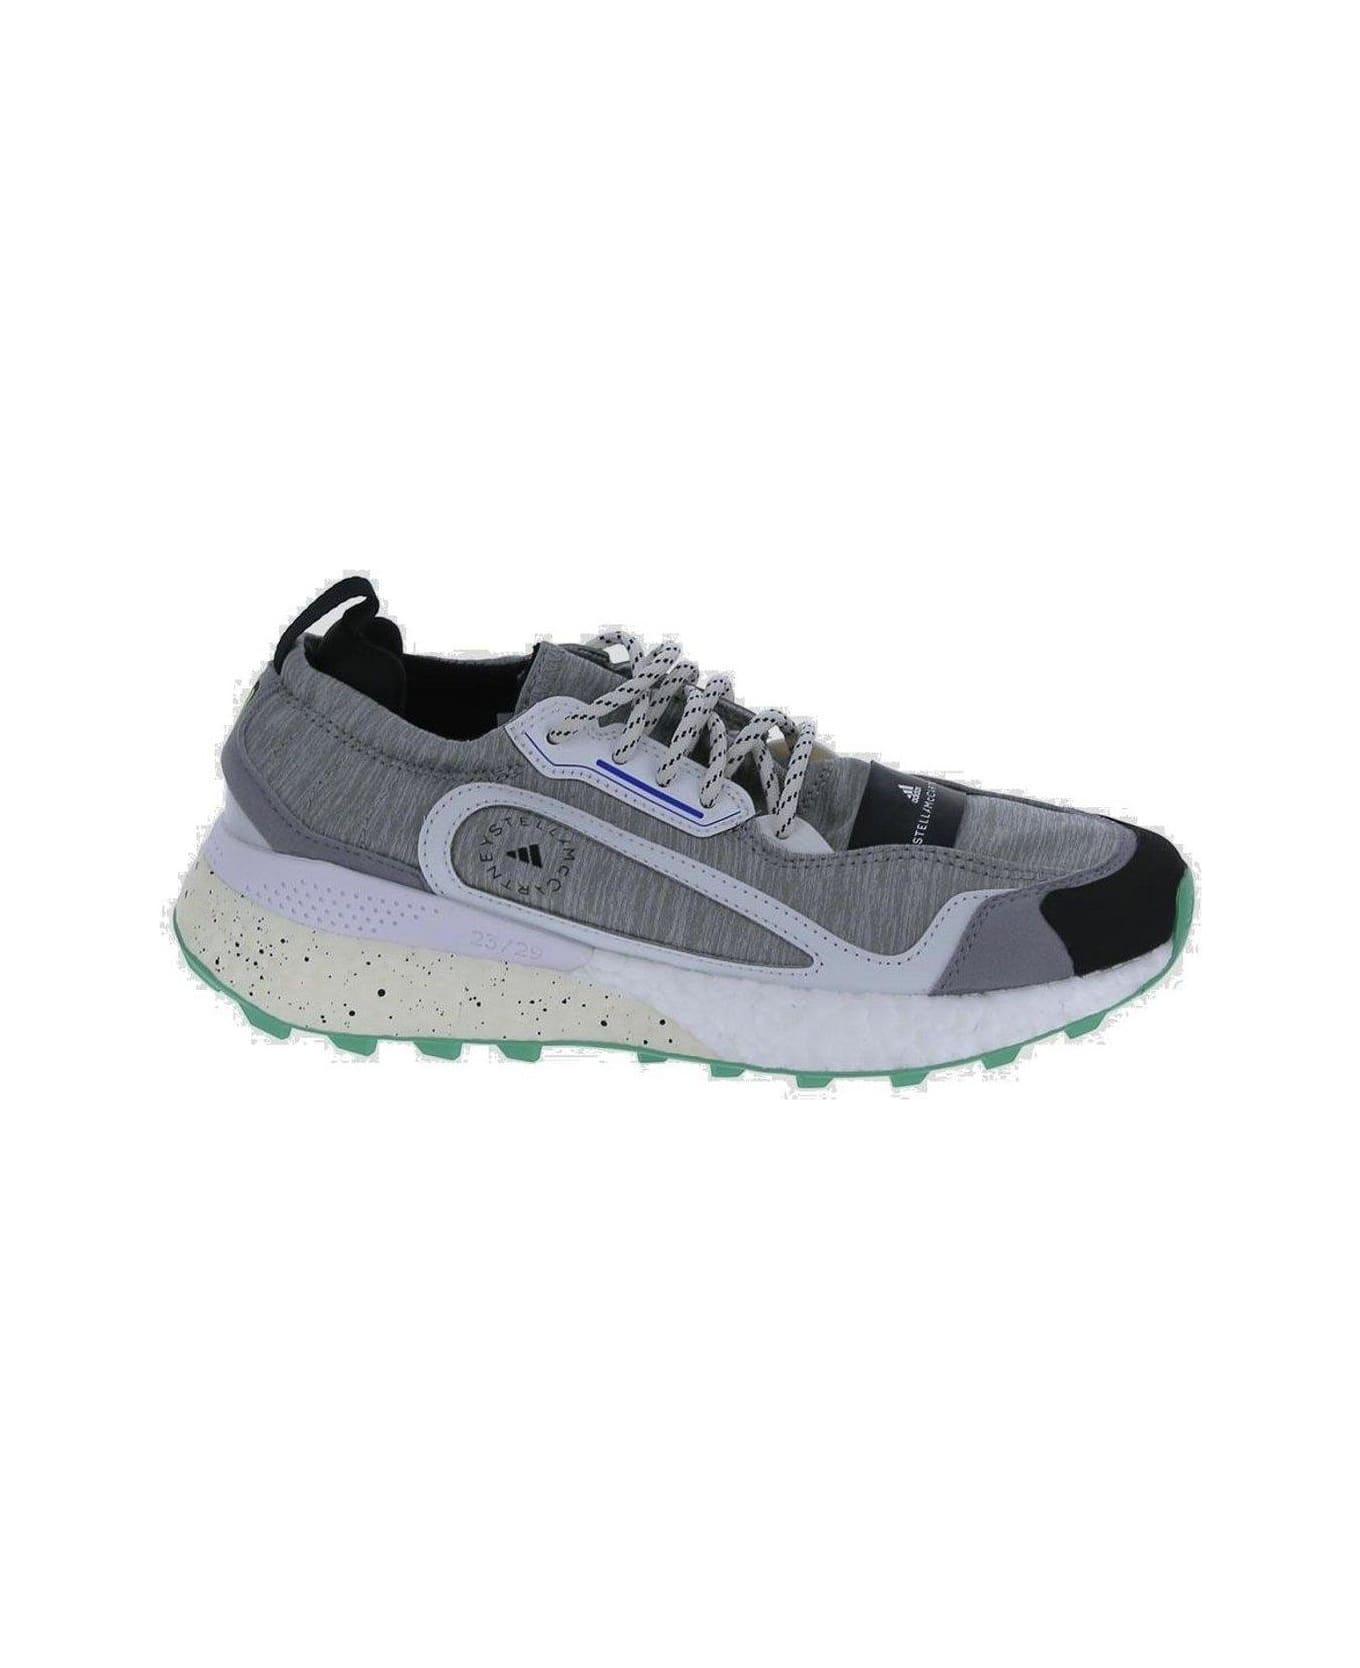 Adidas by Stella McCartney Outdoor Boost 2.0 Sneakers - Grey スニーカー